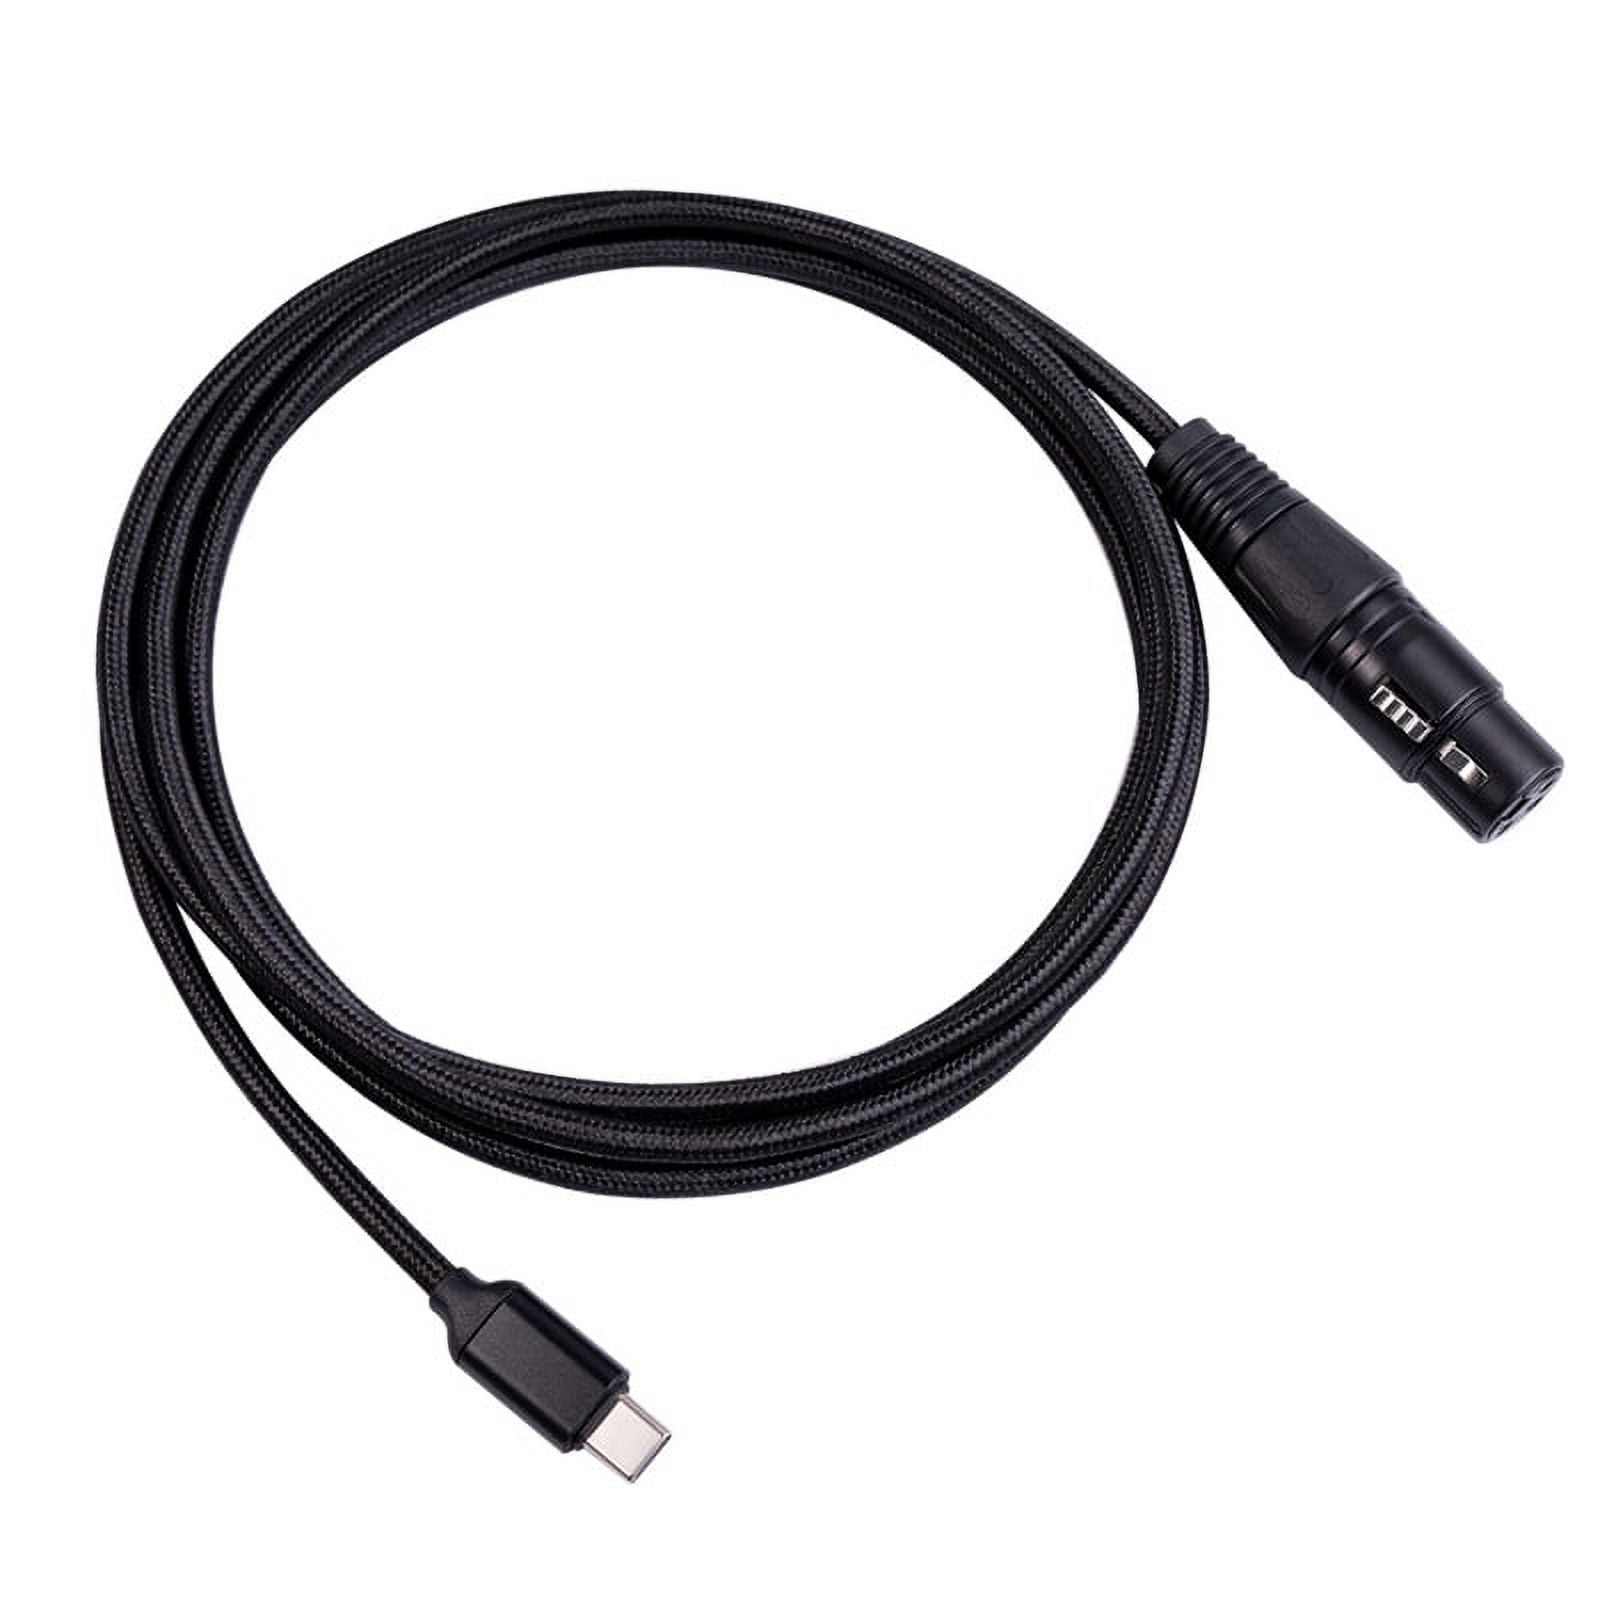 Trjgtas USB C to XLR Female Cable, USB C Microphone Cable Type C